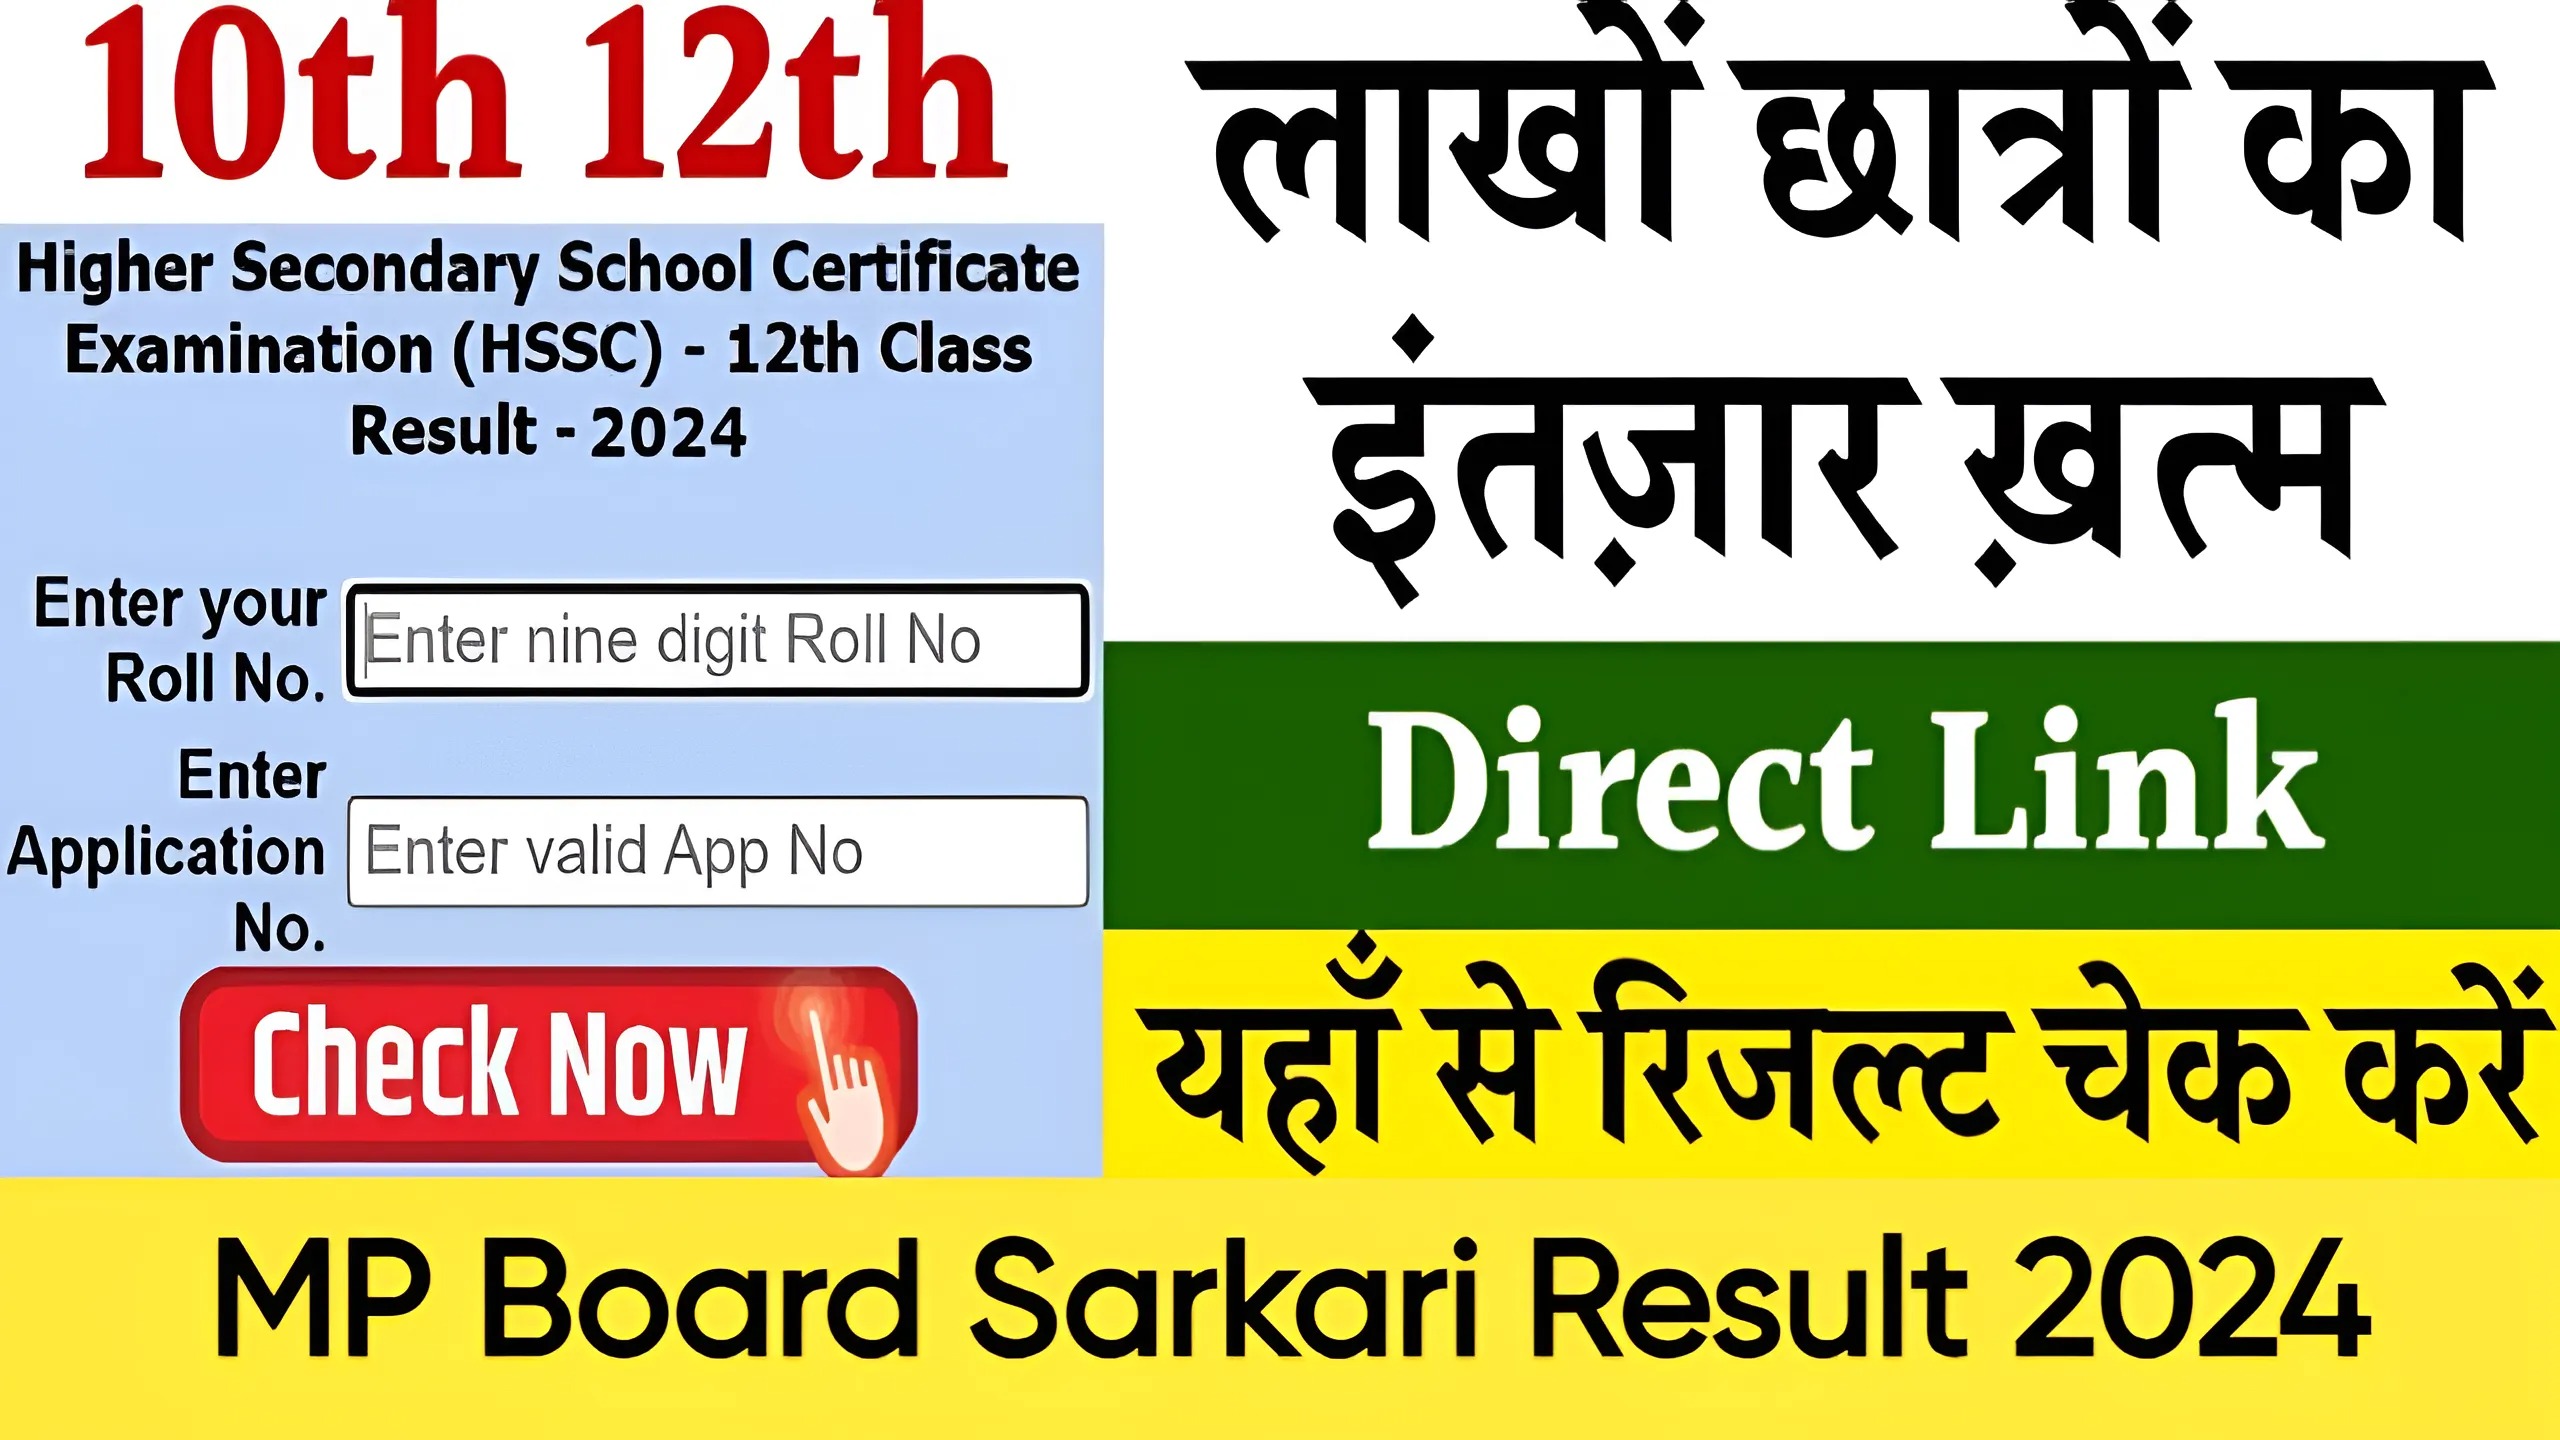 MP Board Sarkari Result 2024